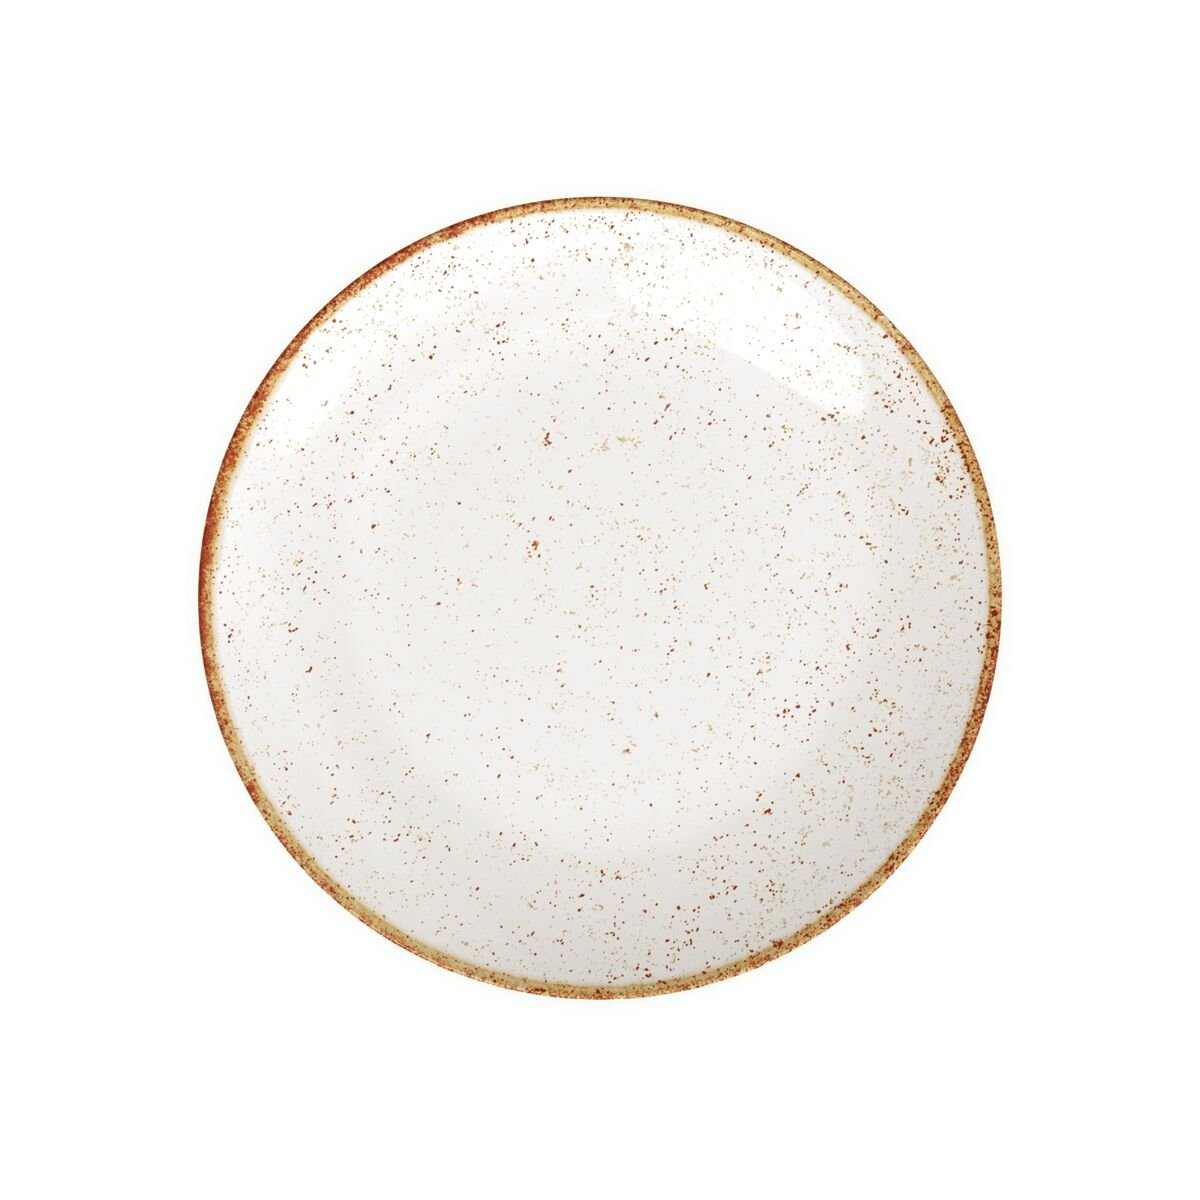 Tramontina Rústico Brown 28 cm Decorated Porcelain Dinner Plate